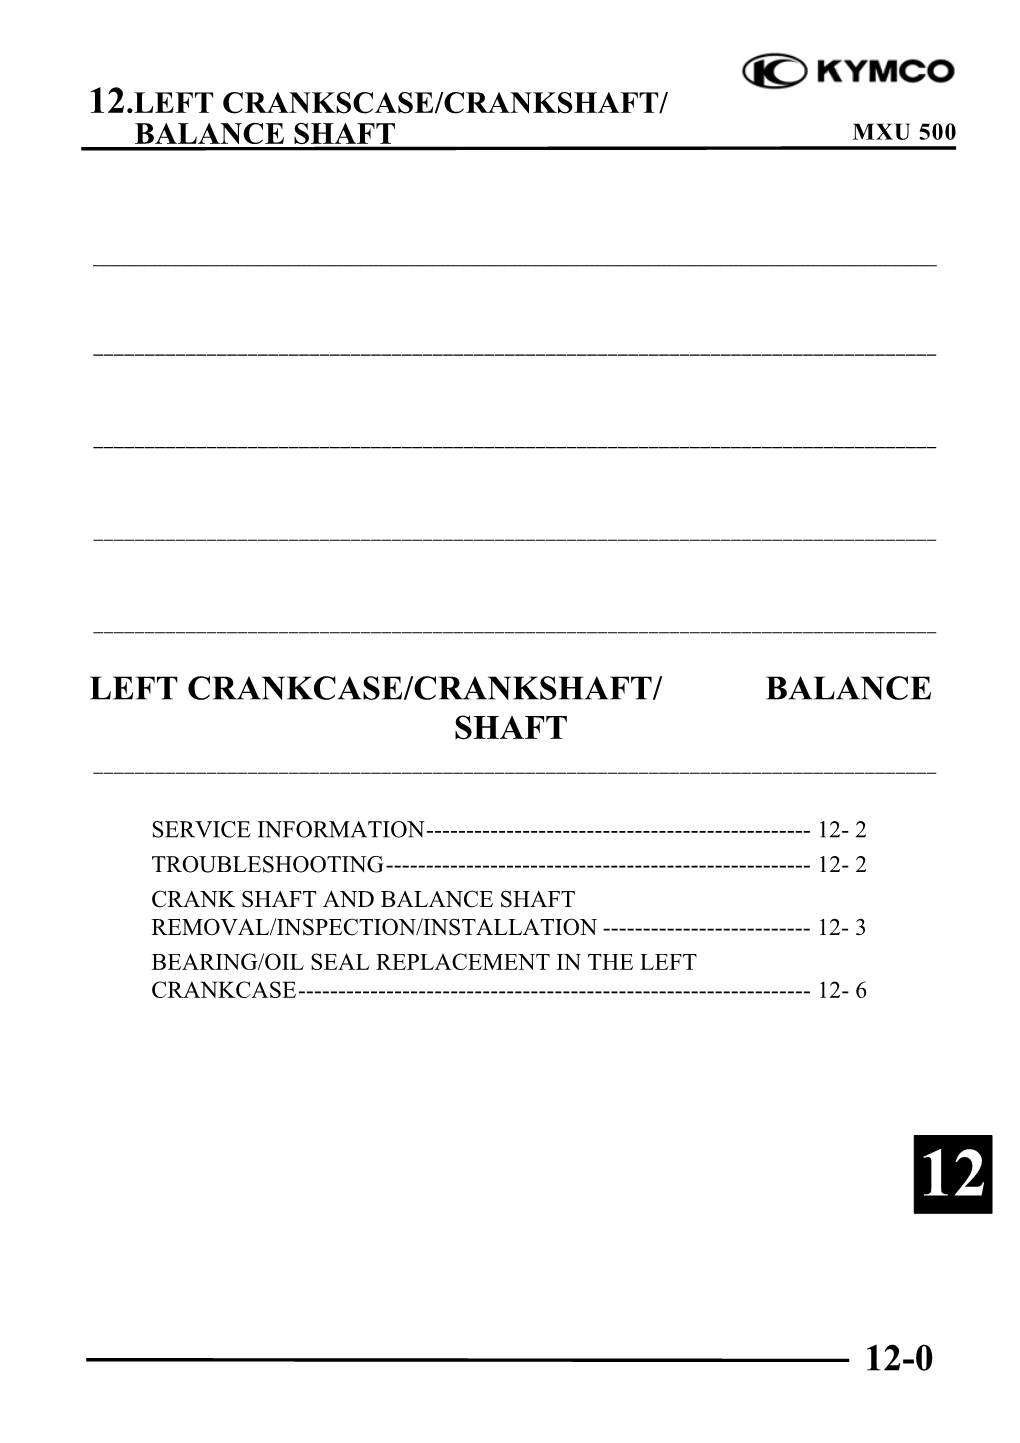 Left Crankcase/Crankshaft/ Balance Shaft ______